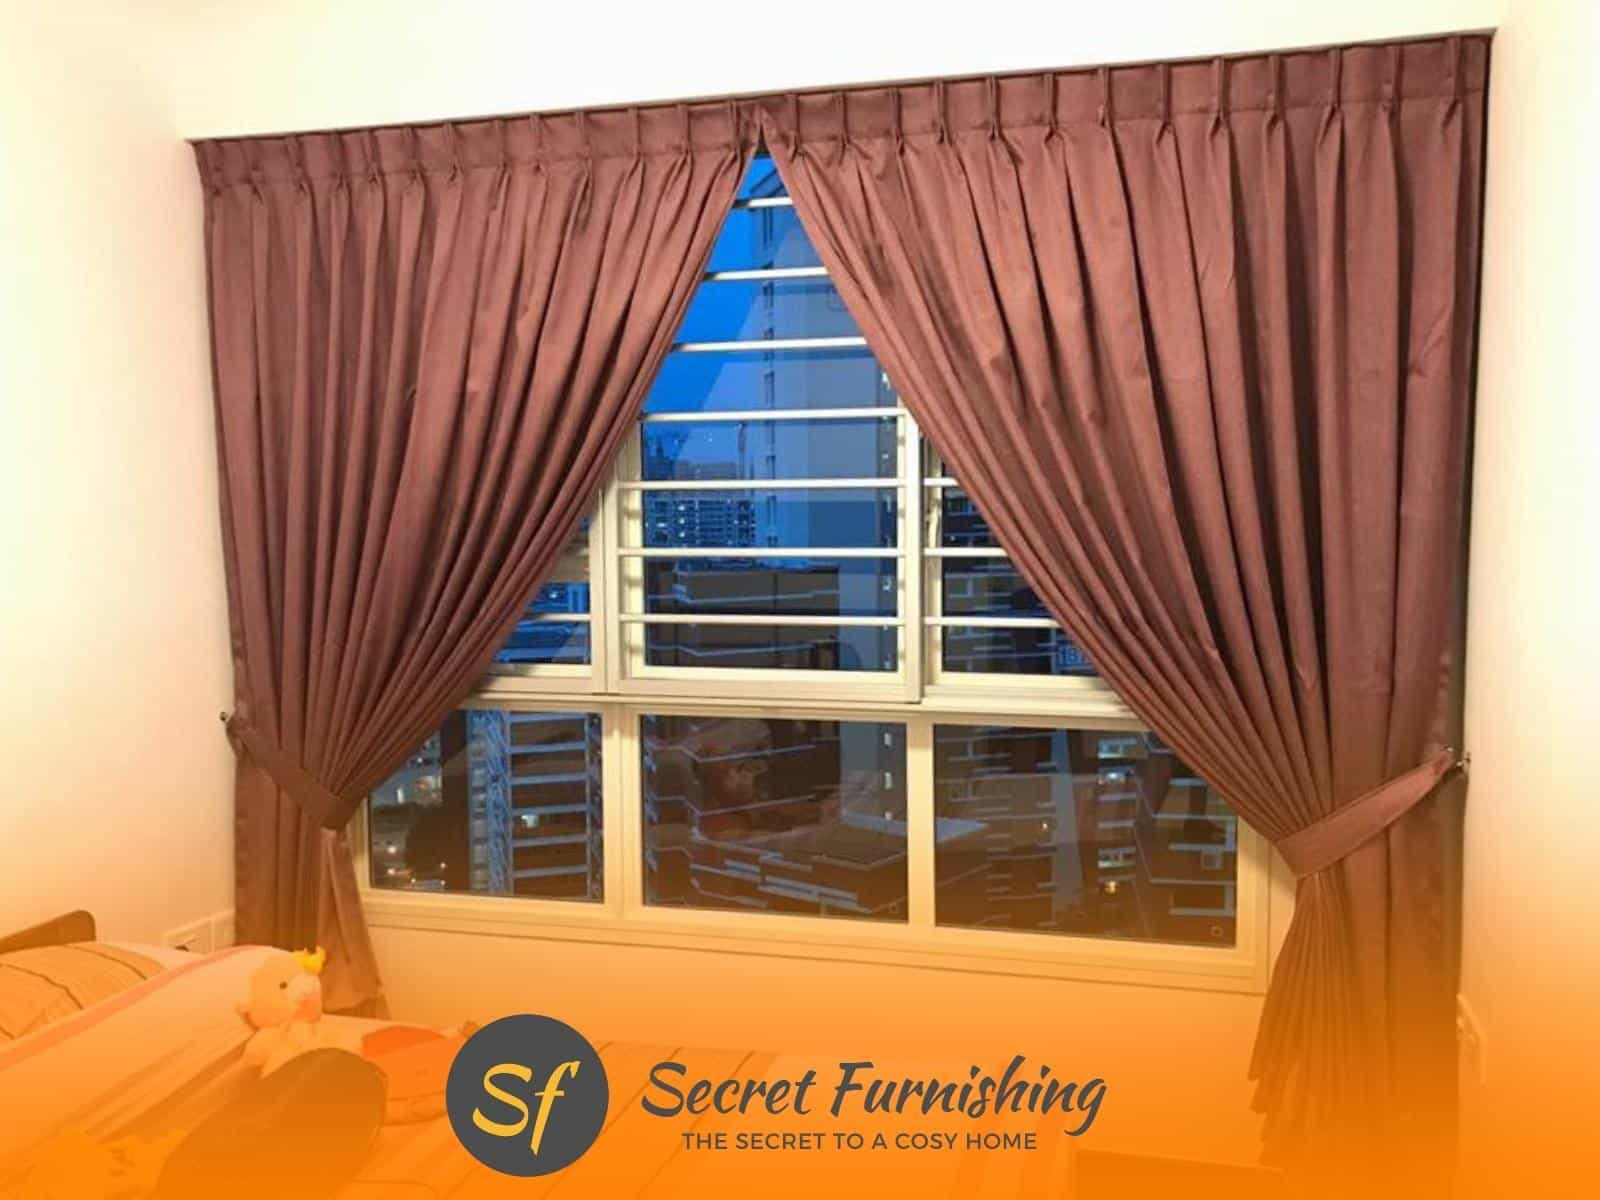 Secret Furnishing's curtains maintenance service in Singapore